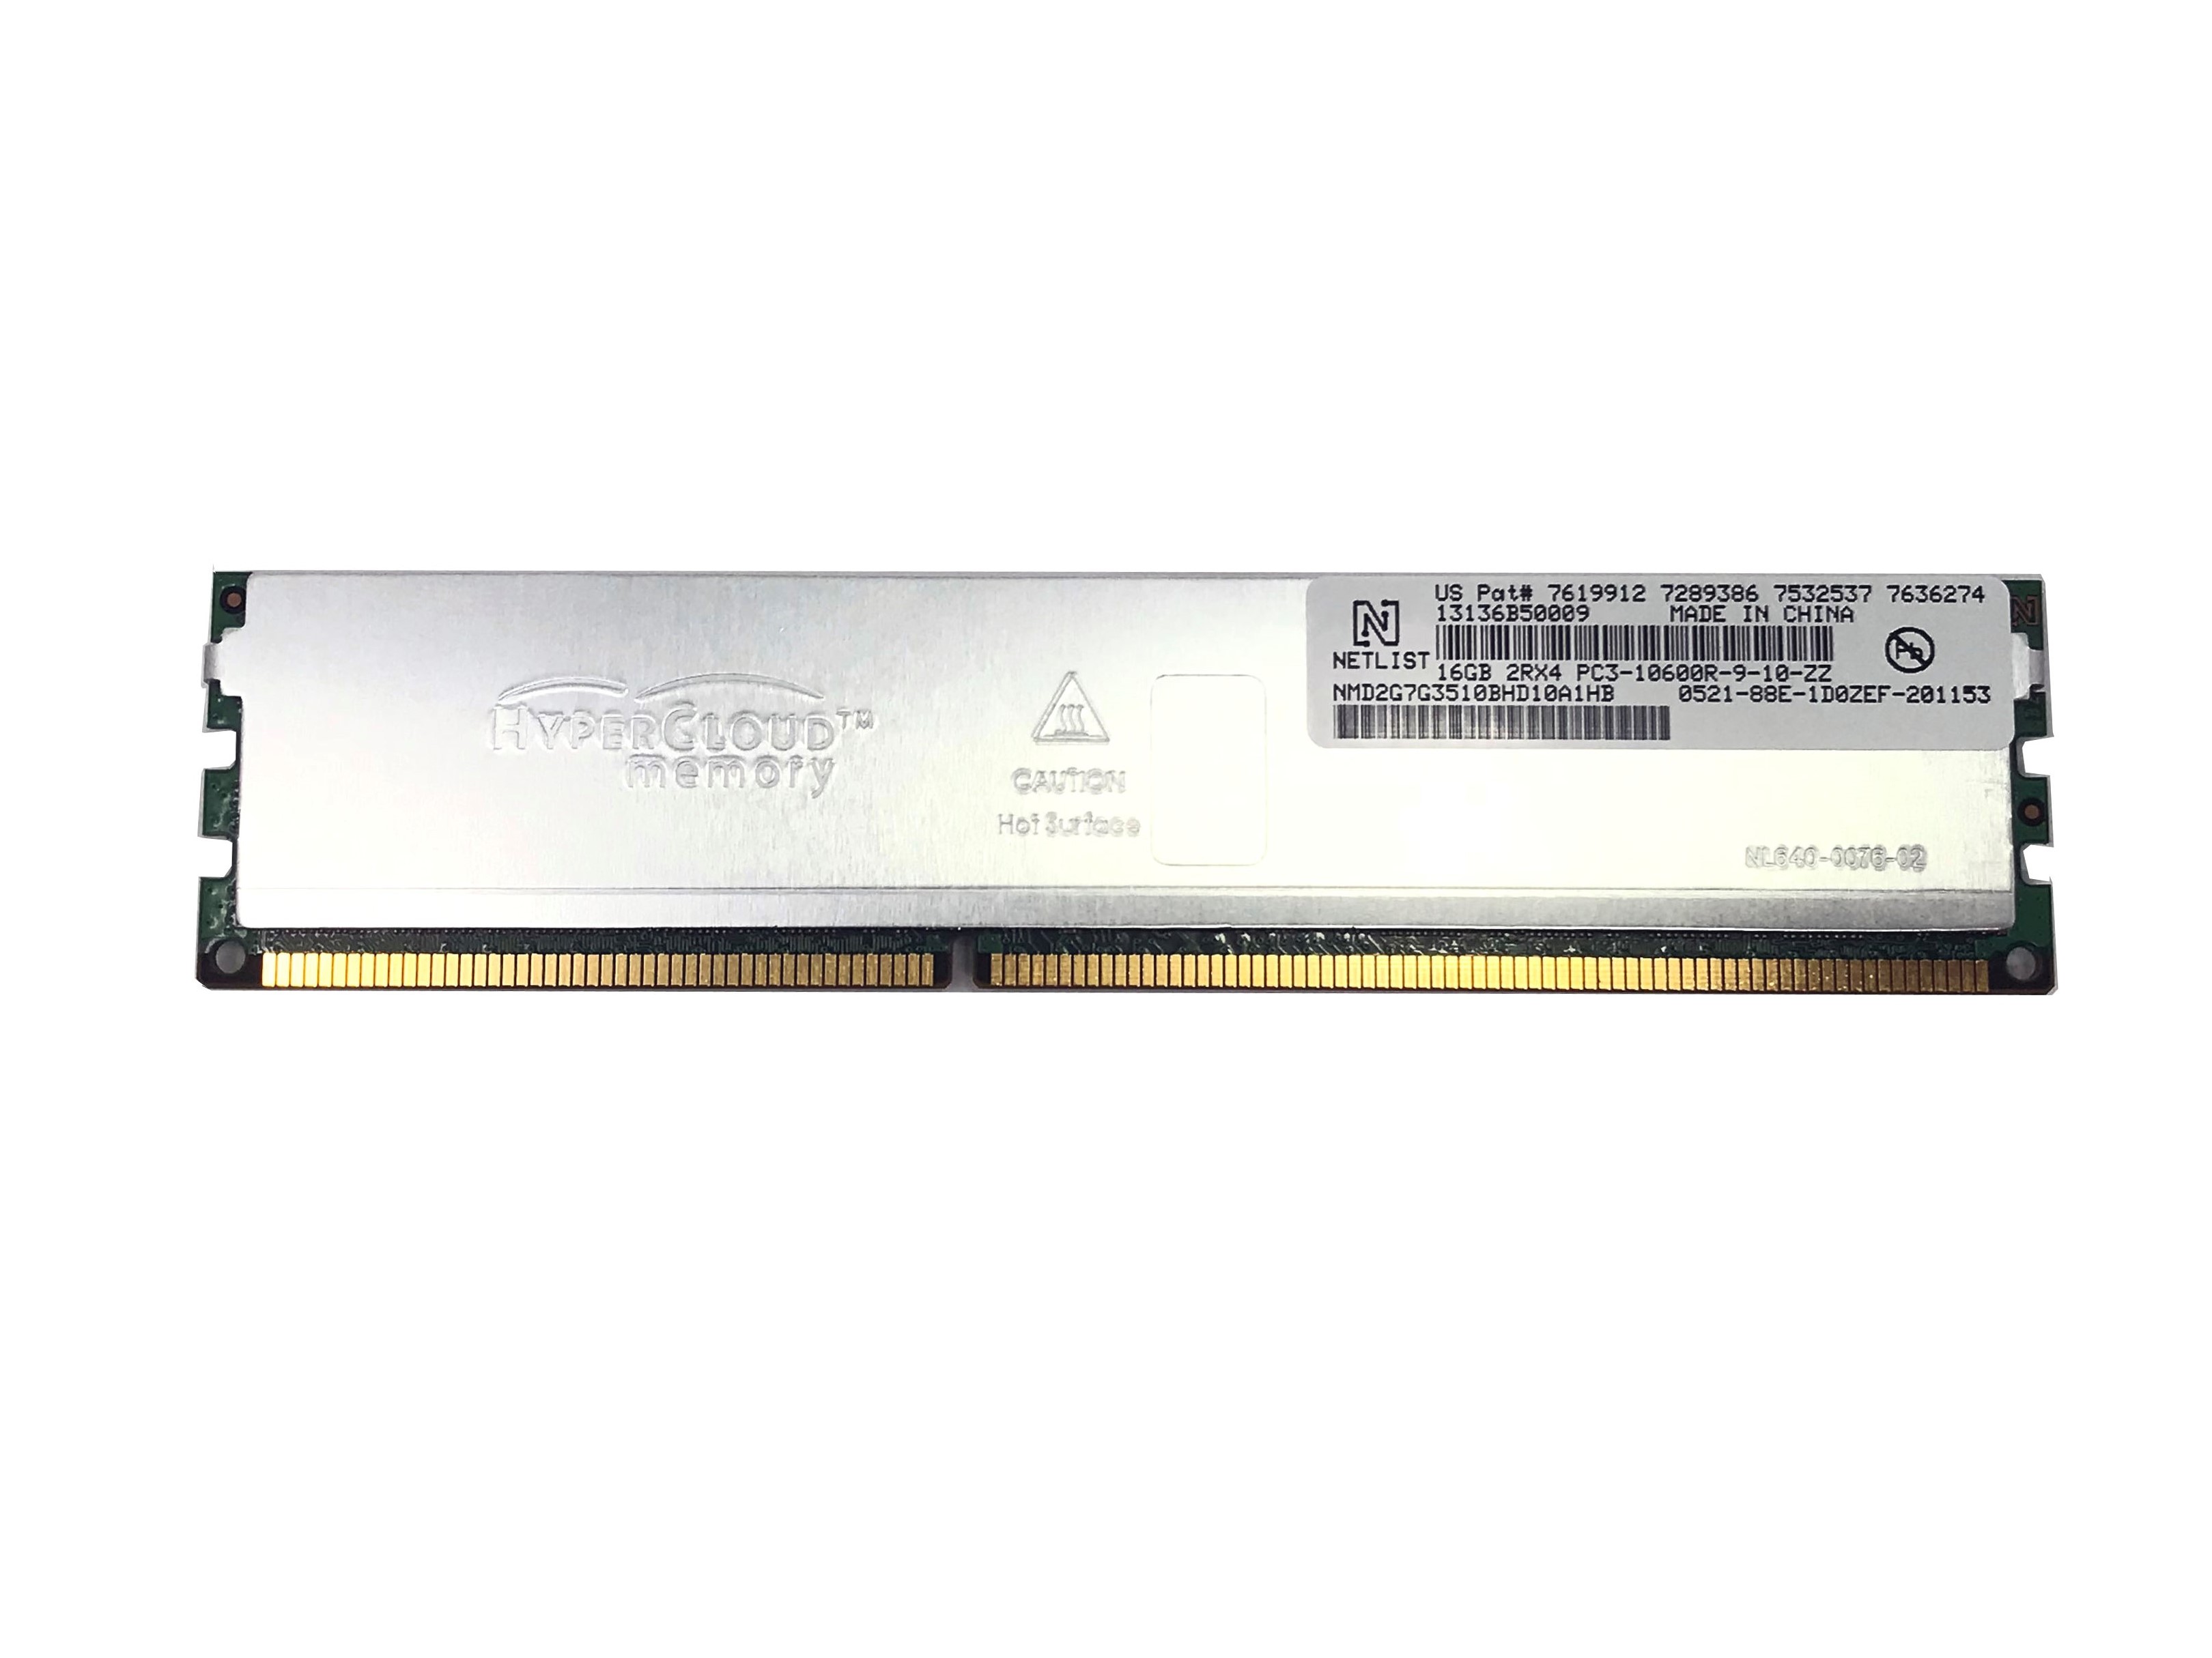 Netlist 16GB 2Rx4 PC3-10600R DDR3 ECC Registered Memory (NMD2G7G3510BHD10A1HB)